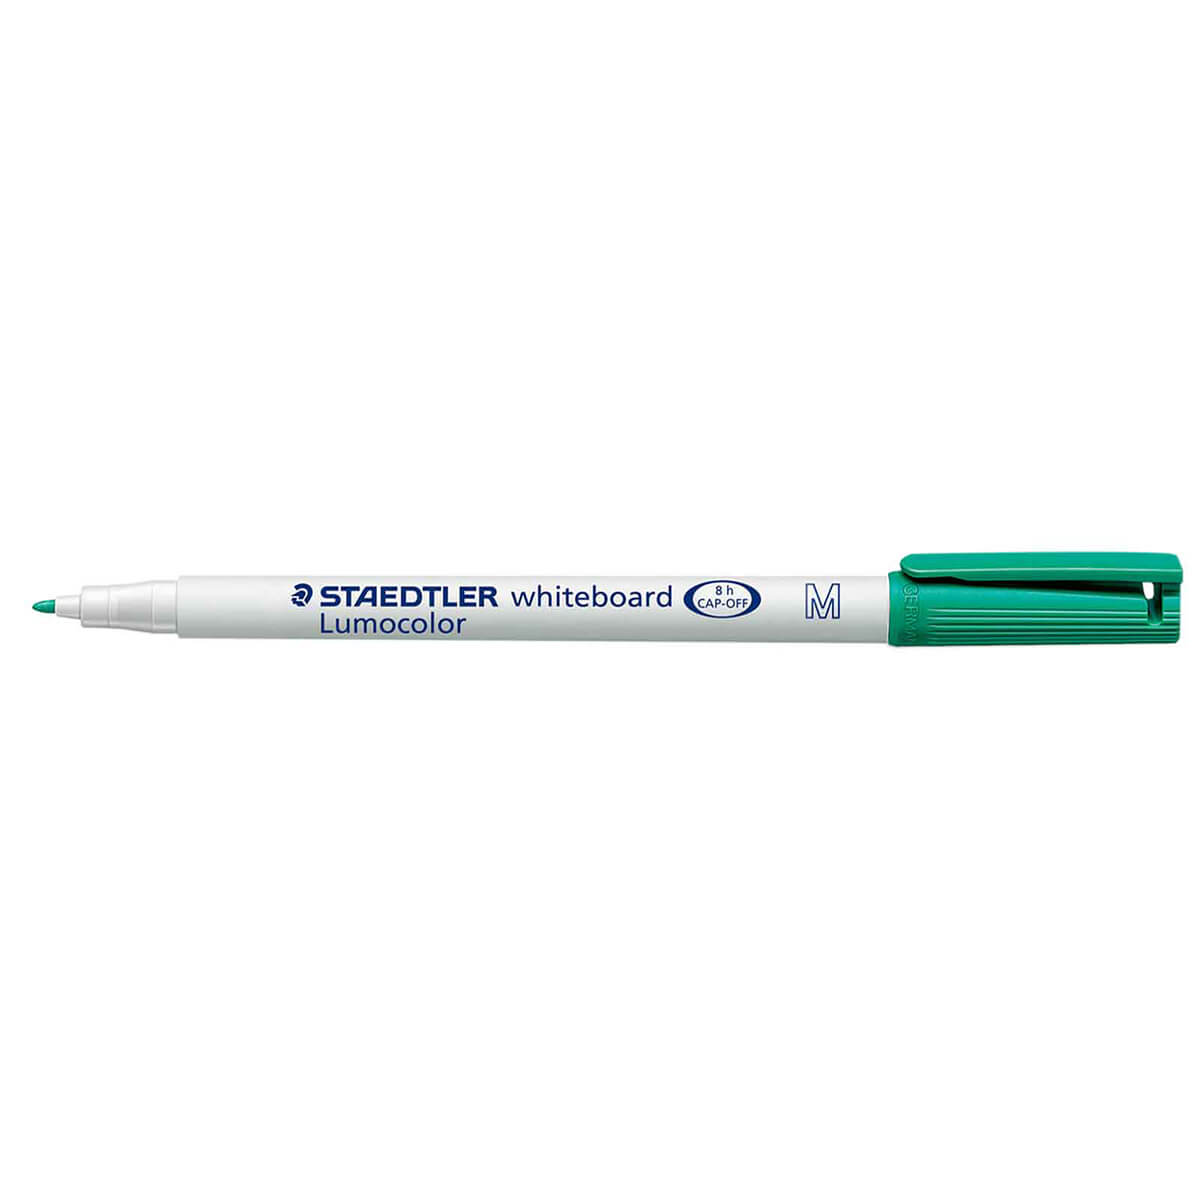 Staedtler Whiteboard pen Lumocolor 301 Green